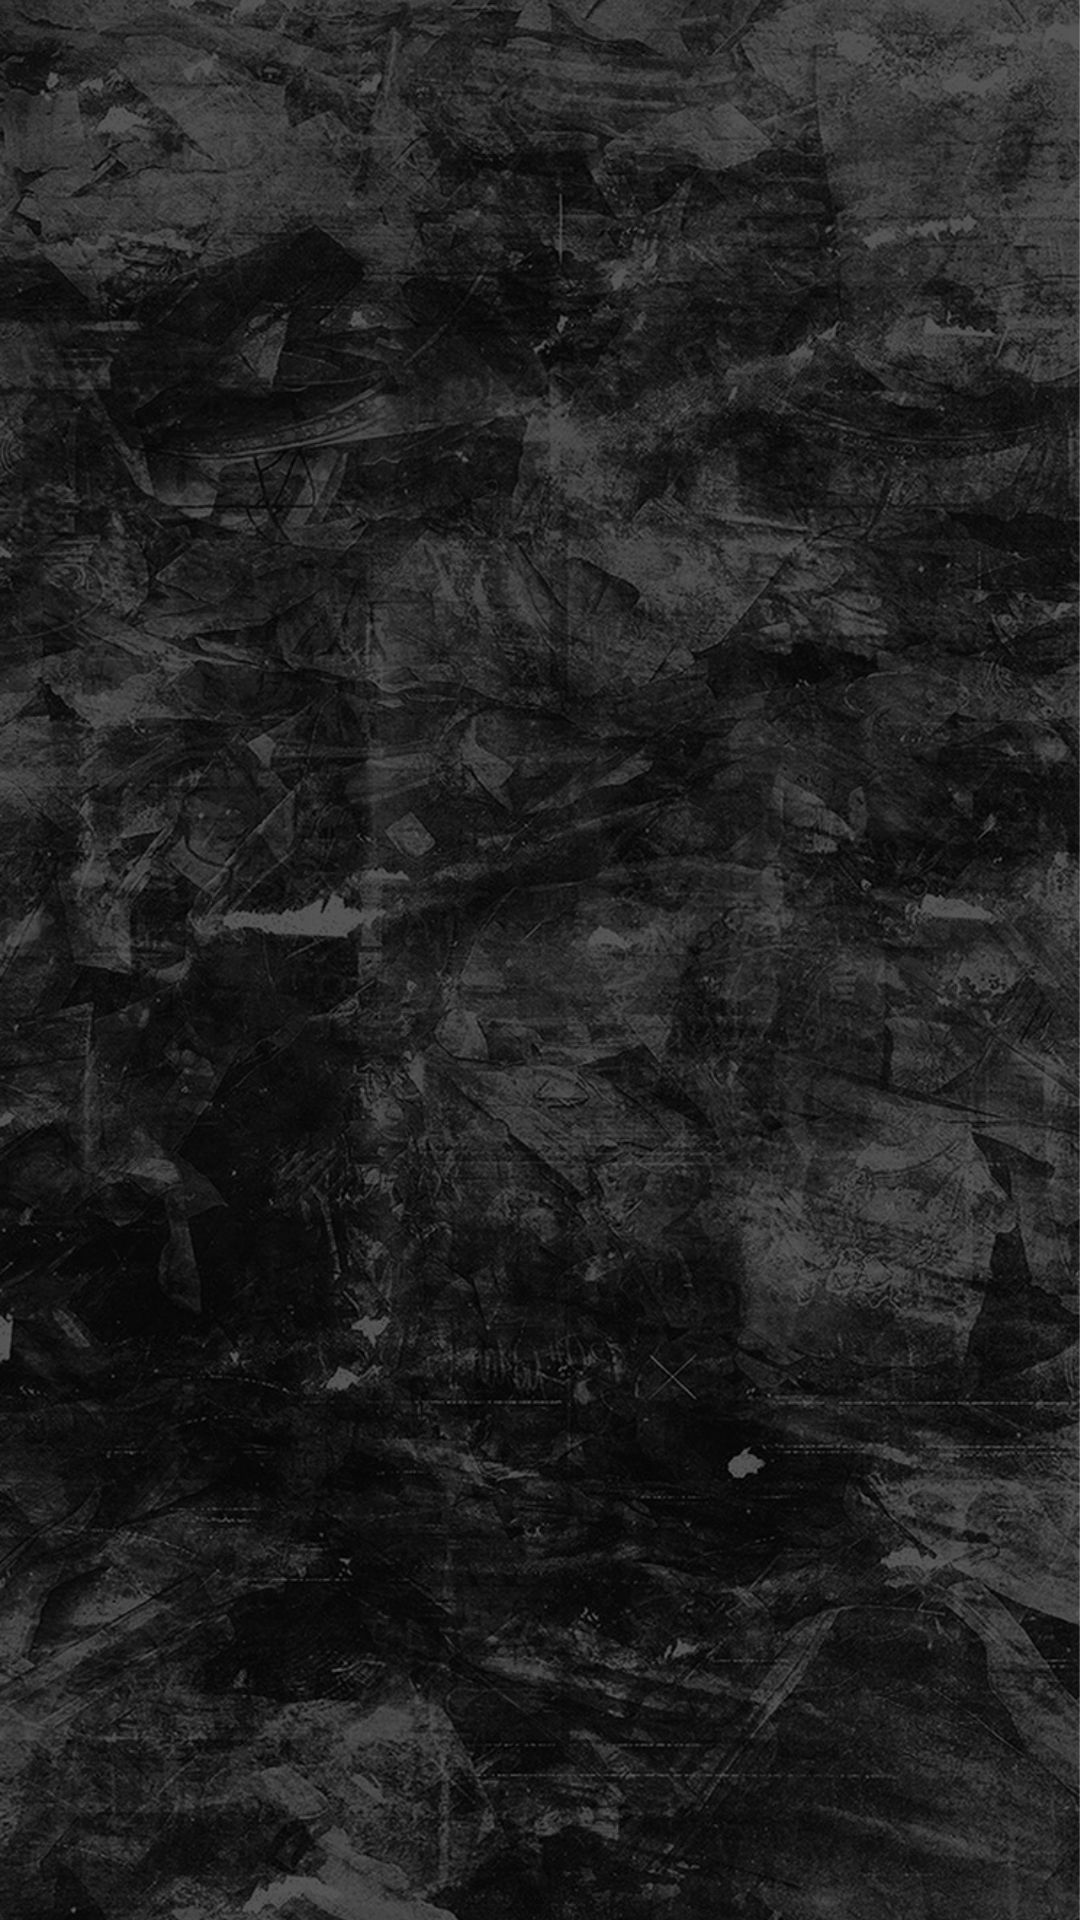 Black Hd Iphone 6 Wallpapers